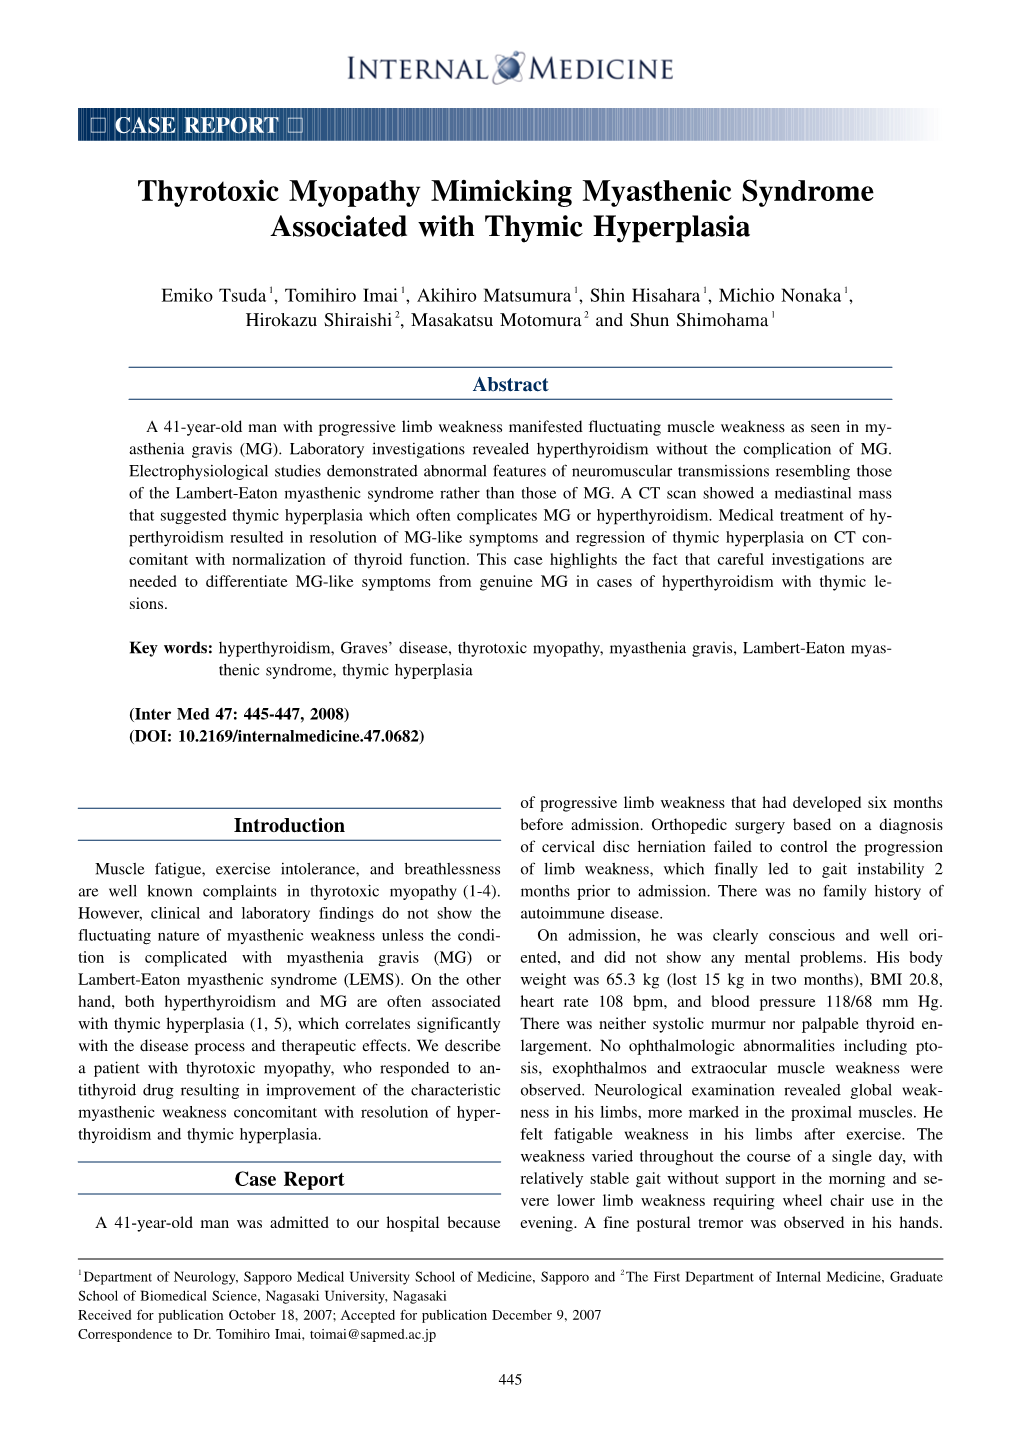 Thyrotoxic Myopathy Mimicking Myasthenic Syndrome Associated with Thymic Hyperplasia